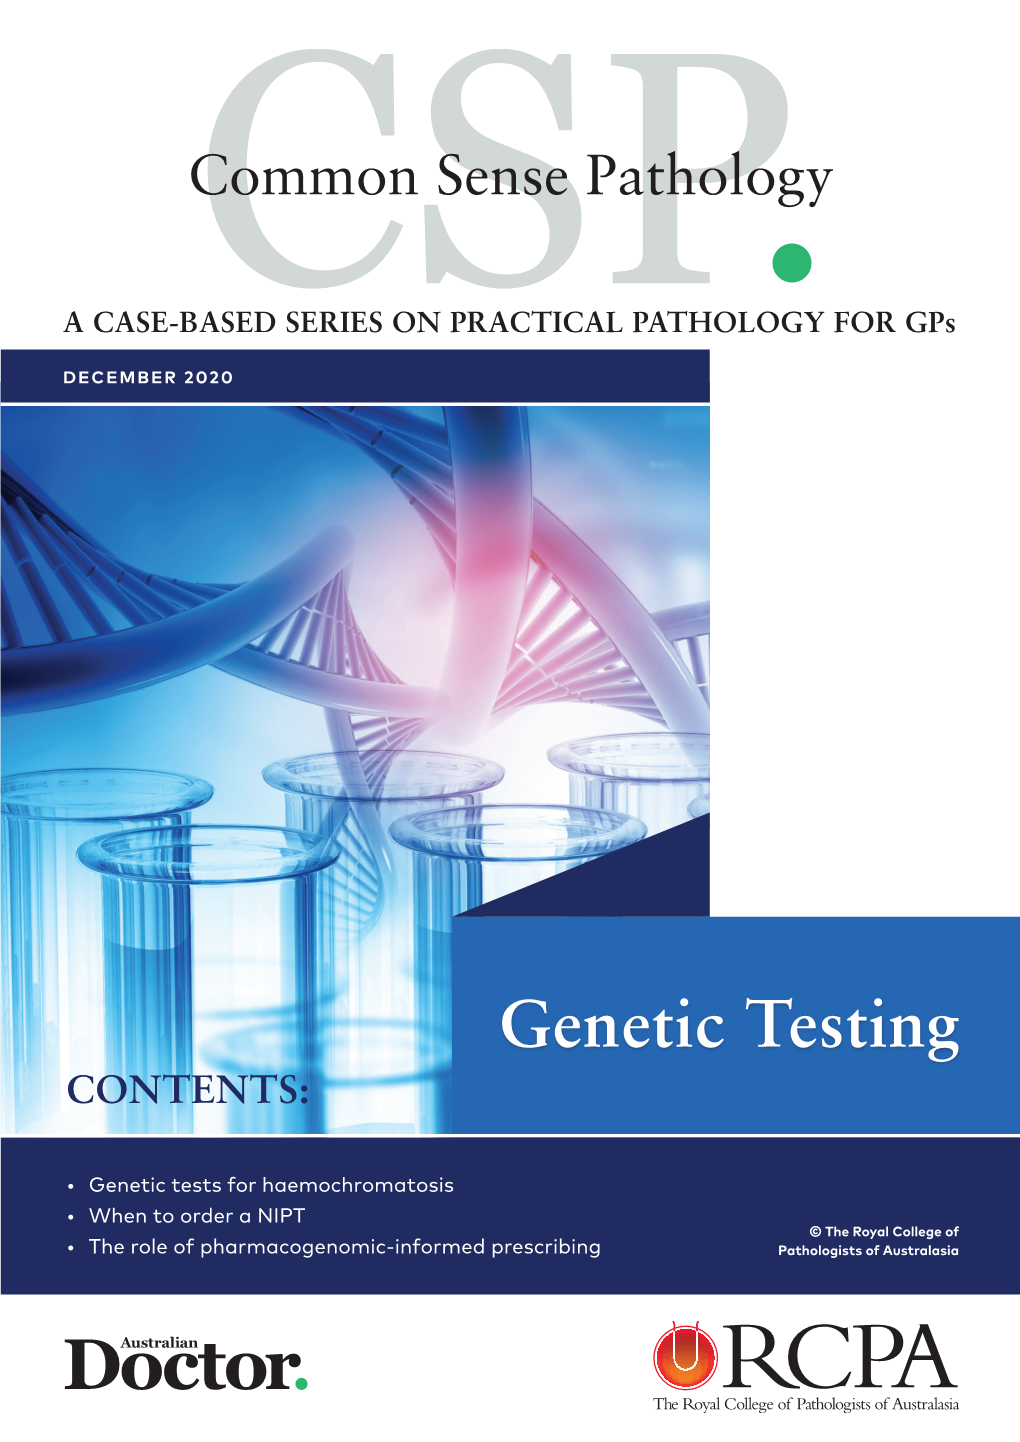 Common Sense Testing for Genetic Testing